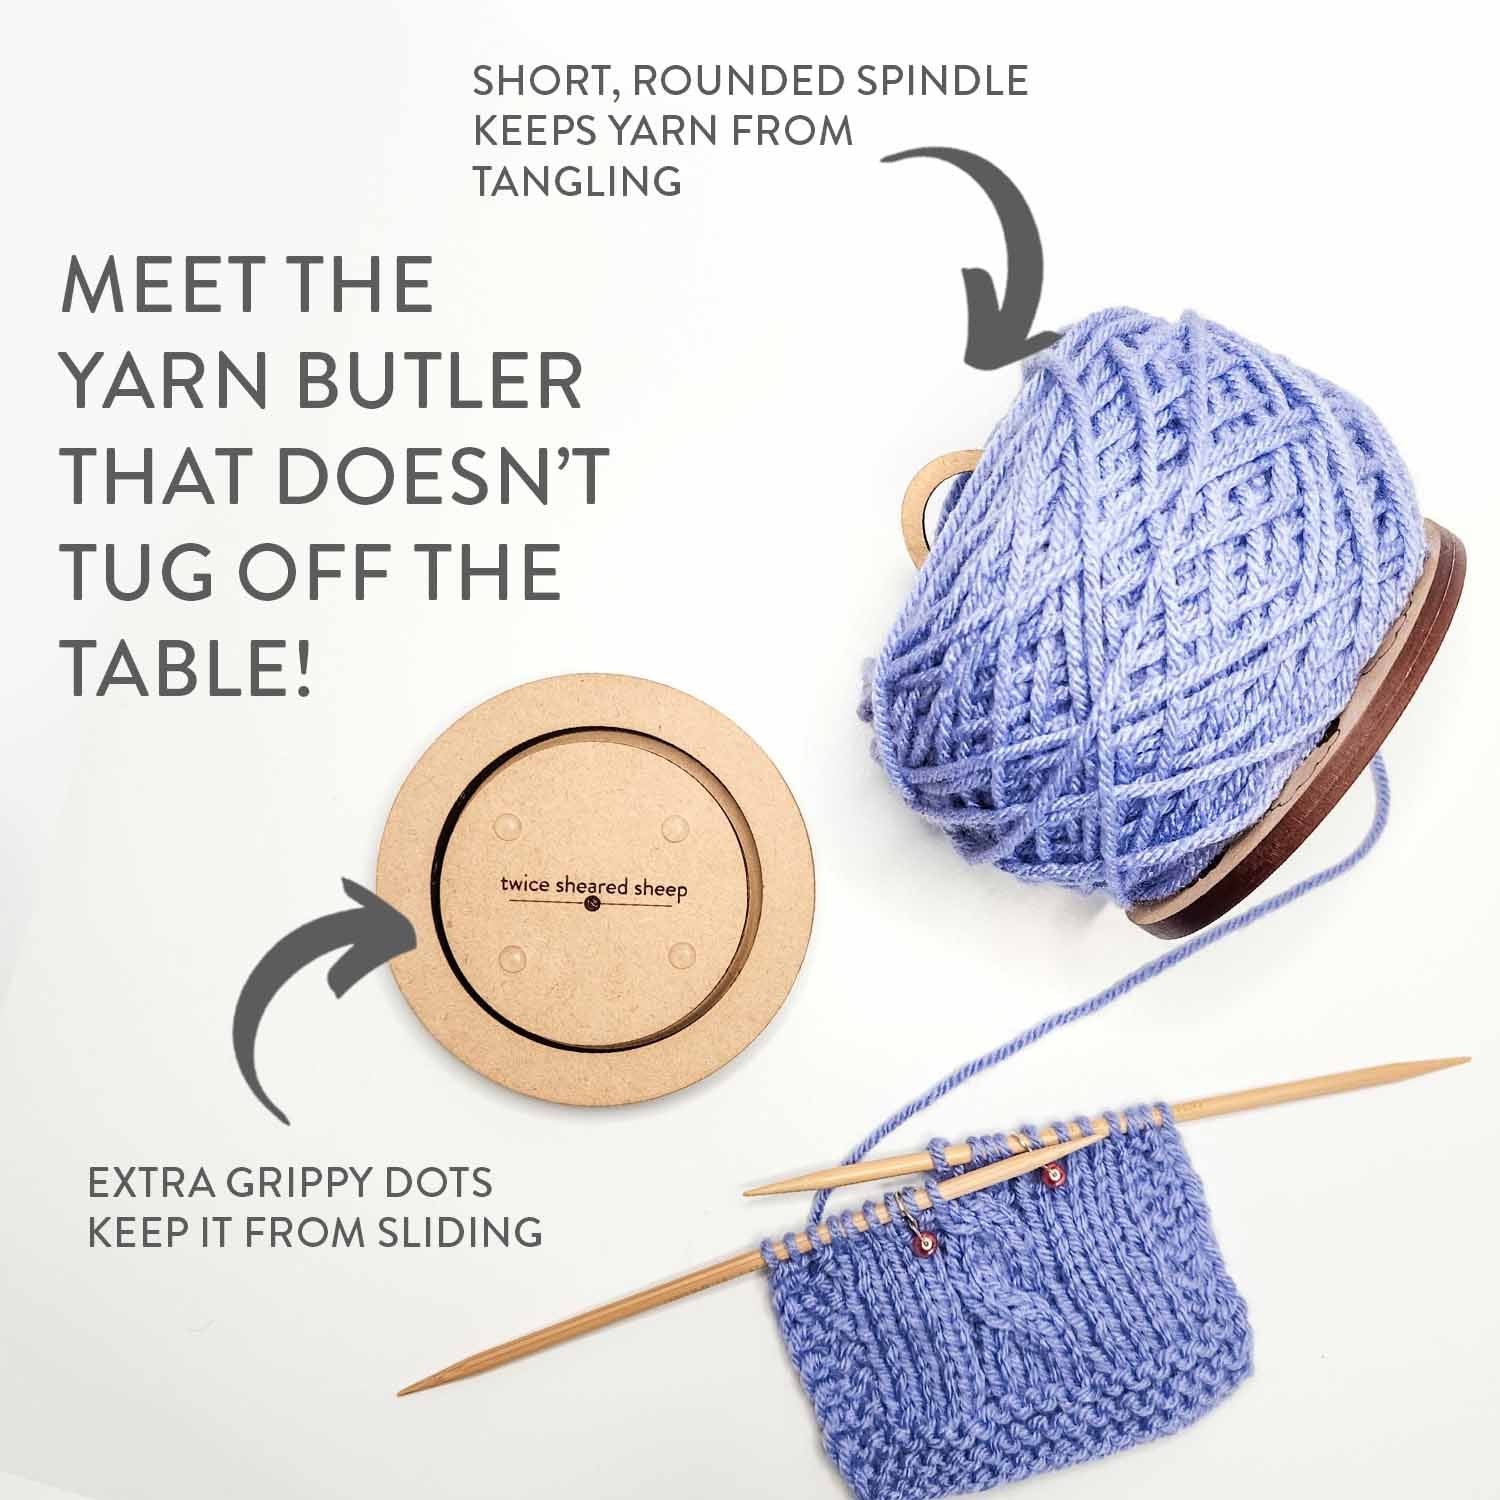 PRE-ORDER - Yarn To Go Carousel - Portable Yarn Butler - Carousel & Wrist strap Bundle - SHIPPING IN 30 DAYS